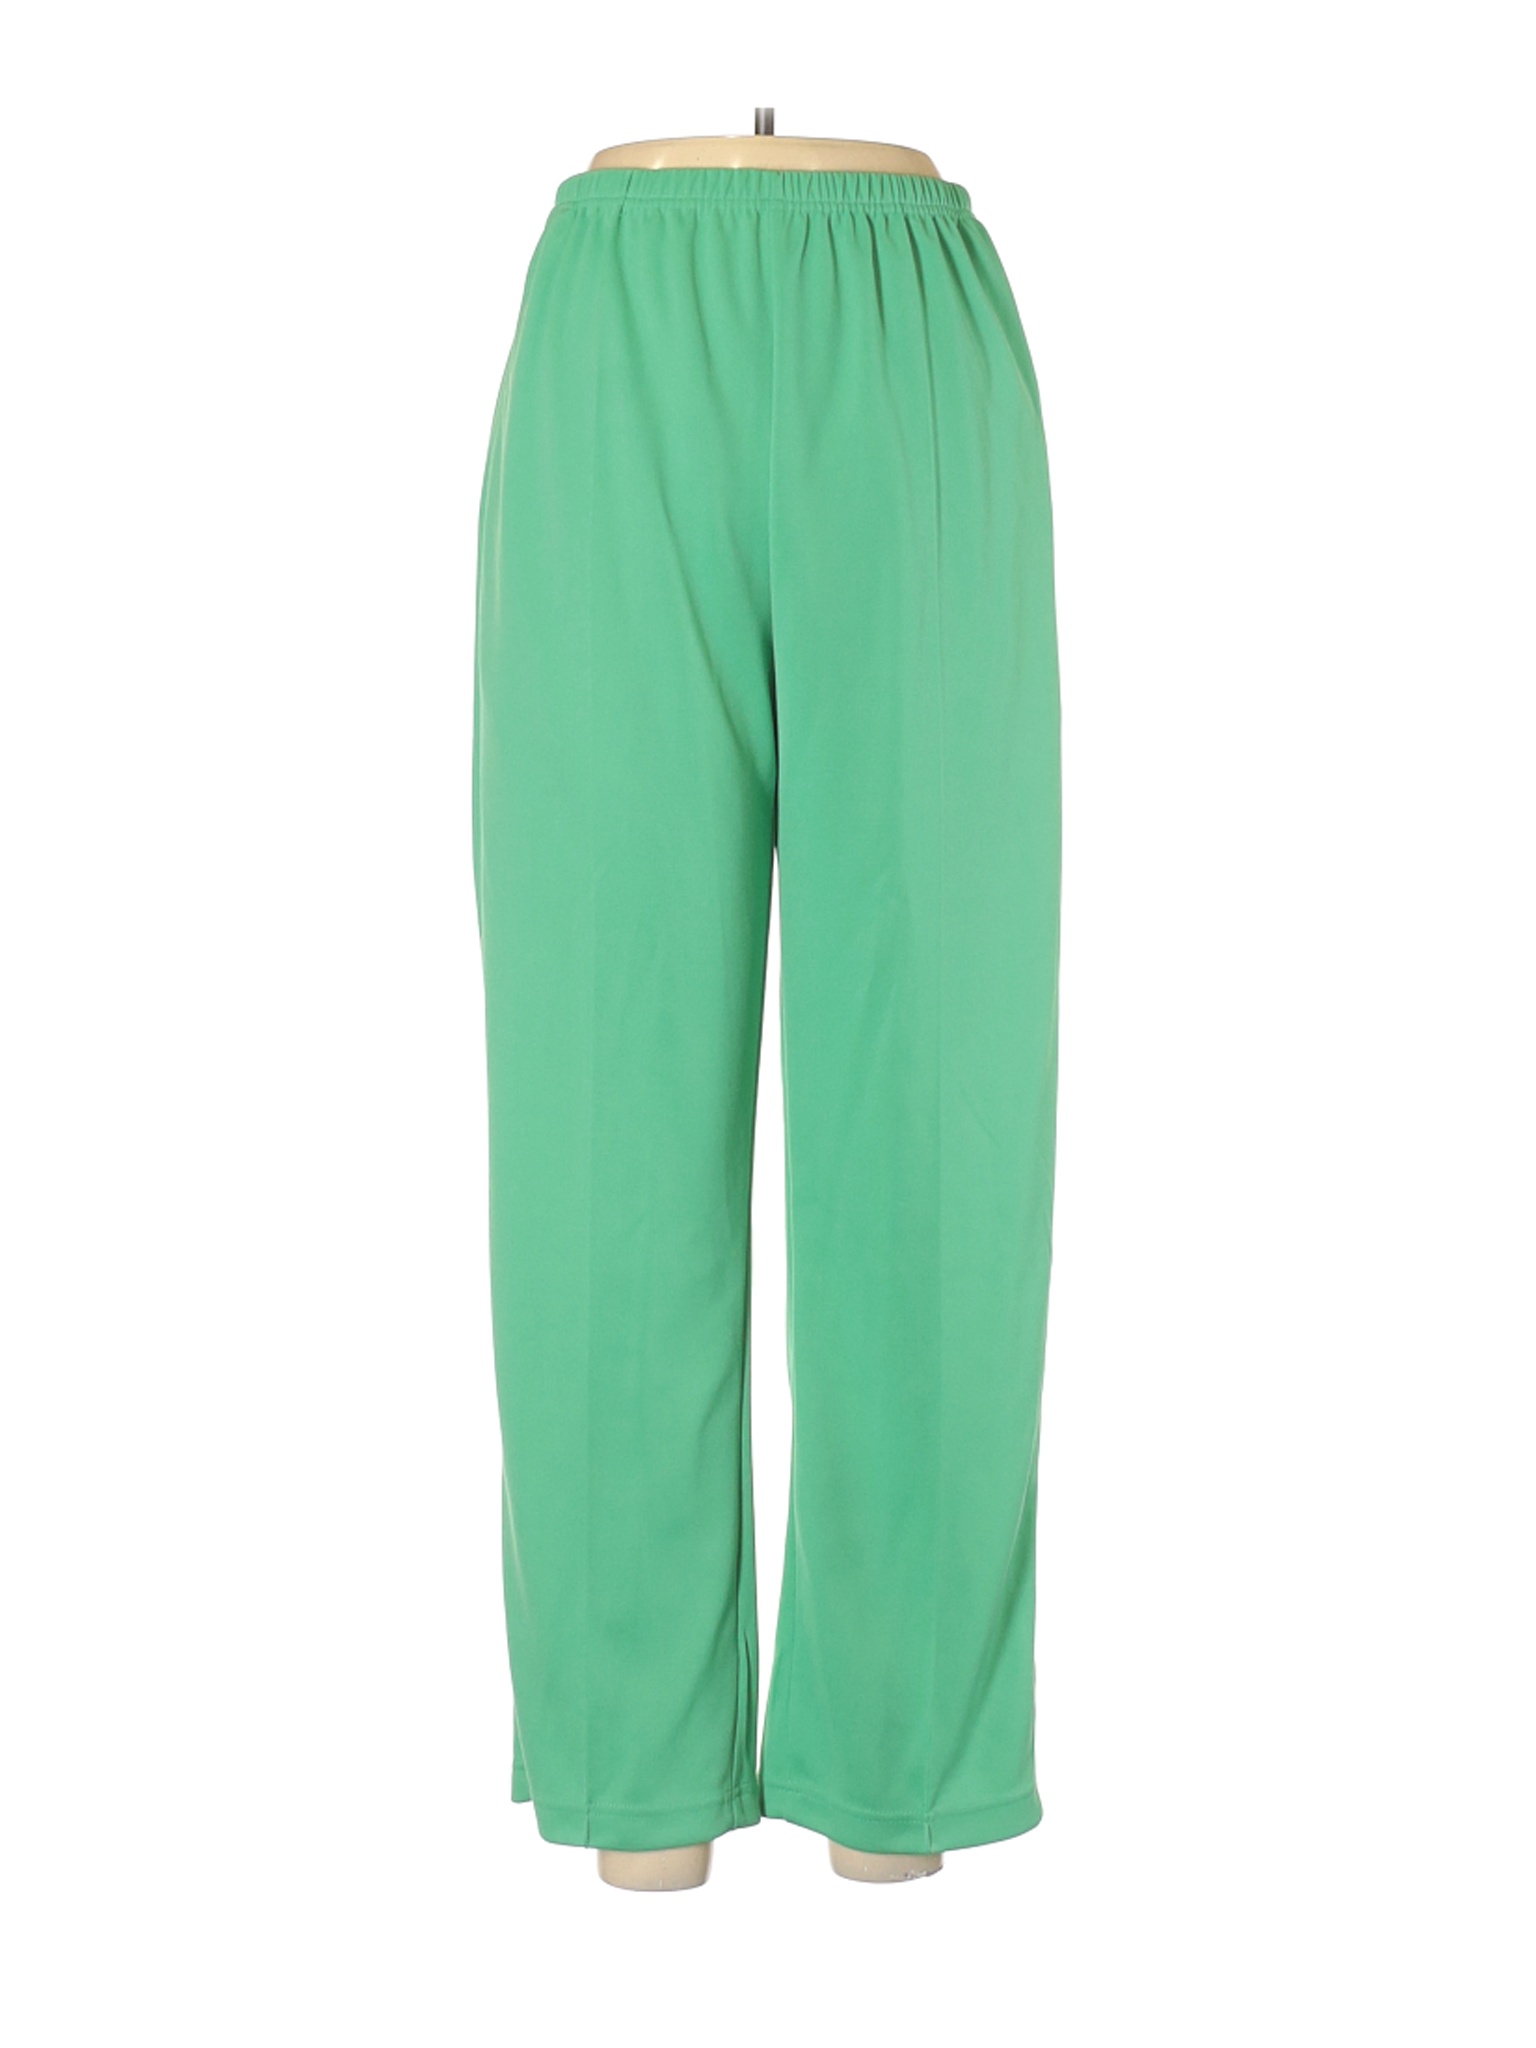 Sara Morgan for Haband Women Green Casual Pants 8 Petites | eBay